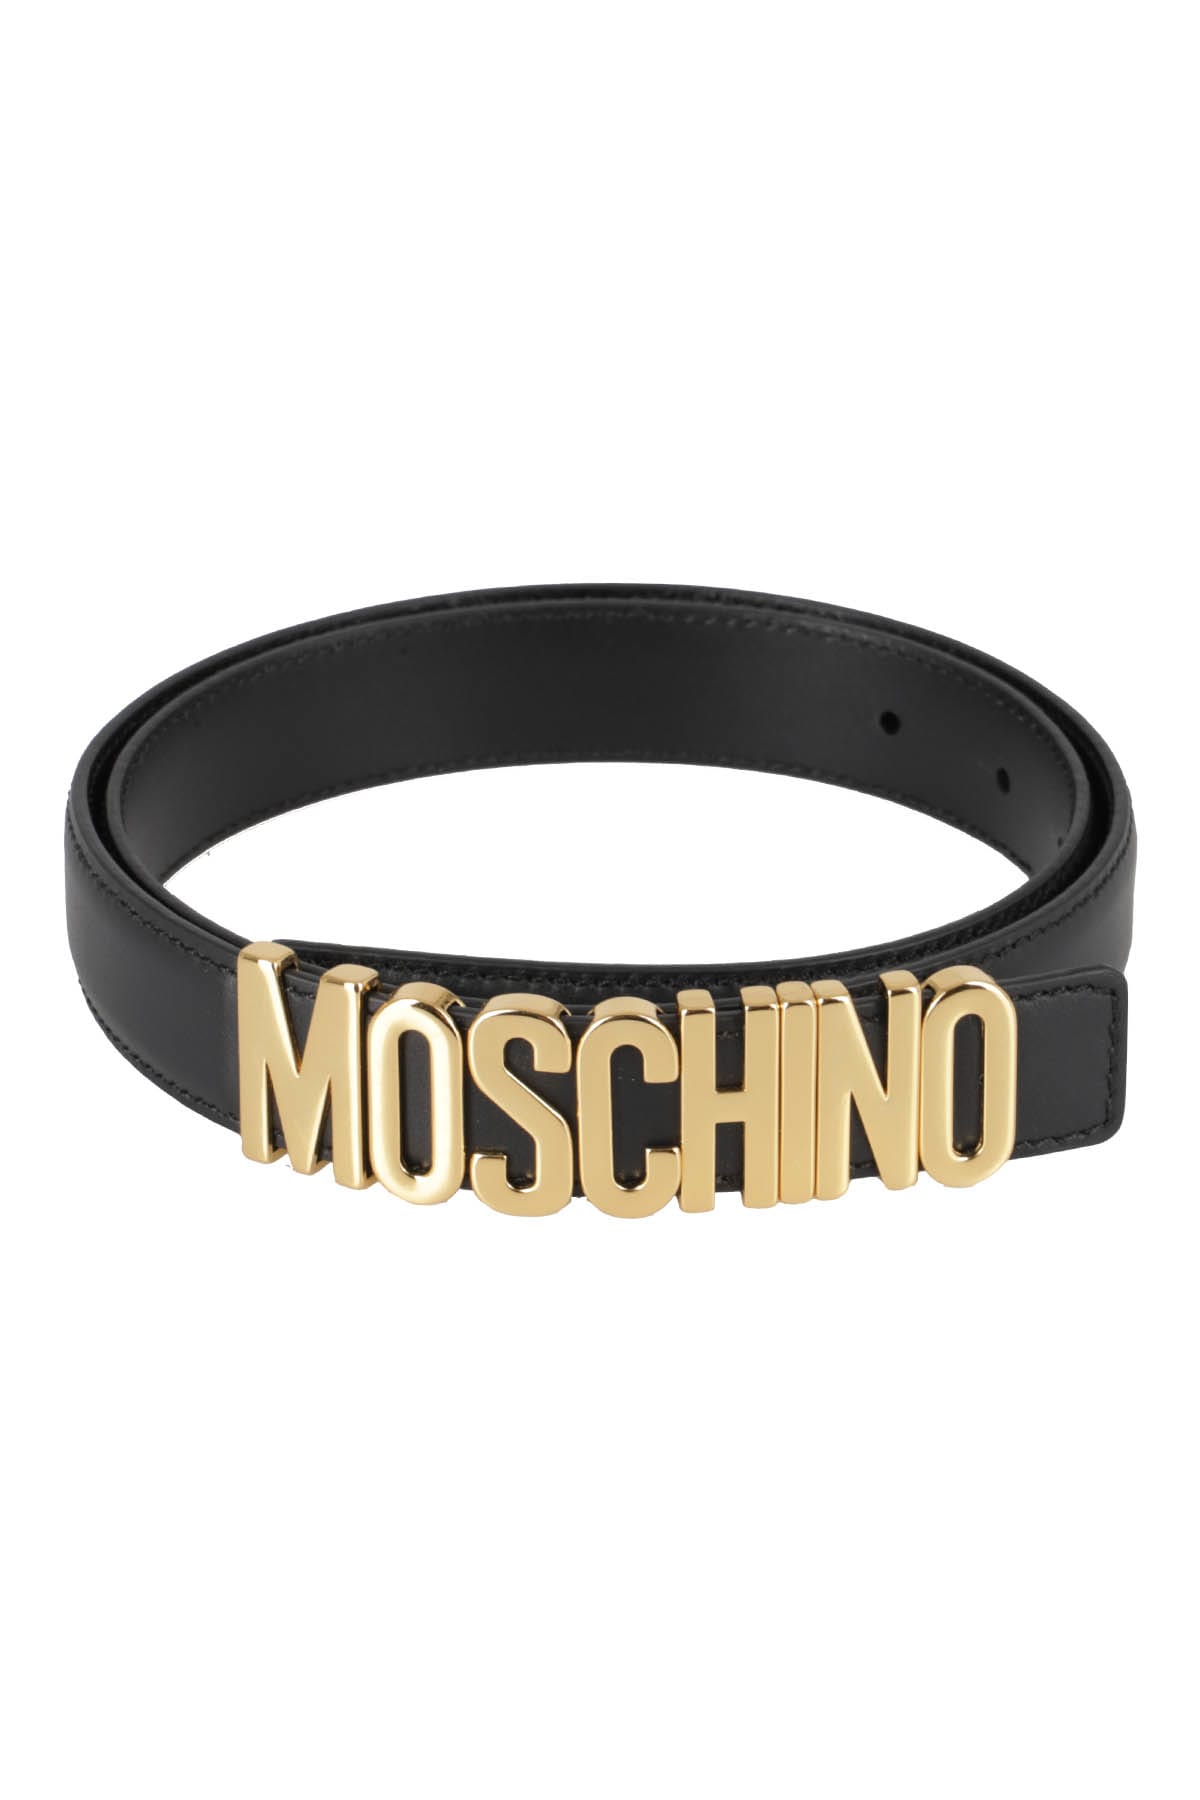 Moschino Leather